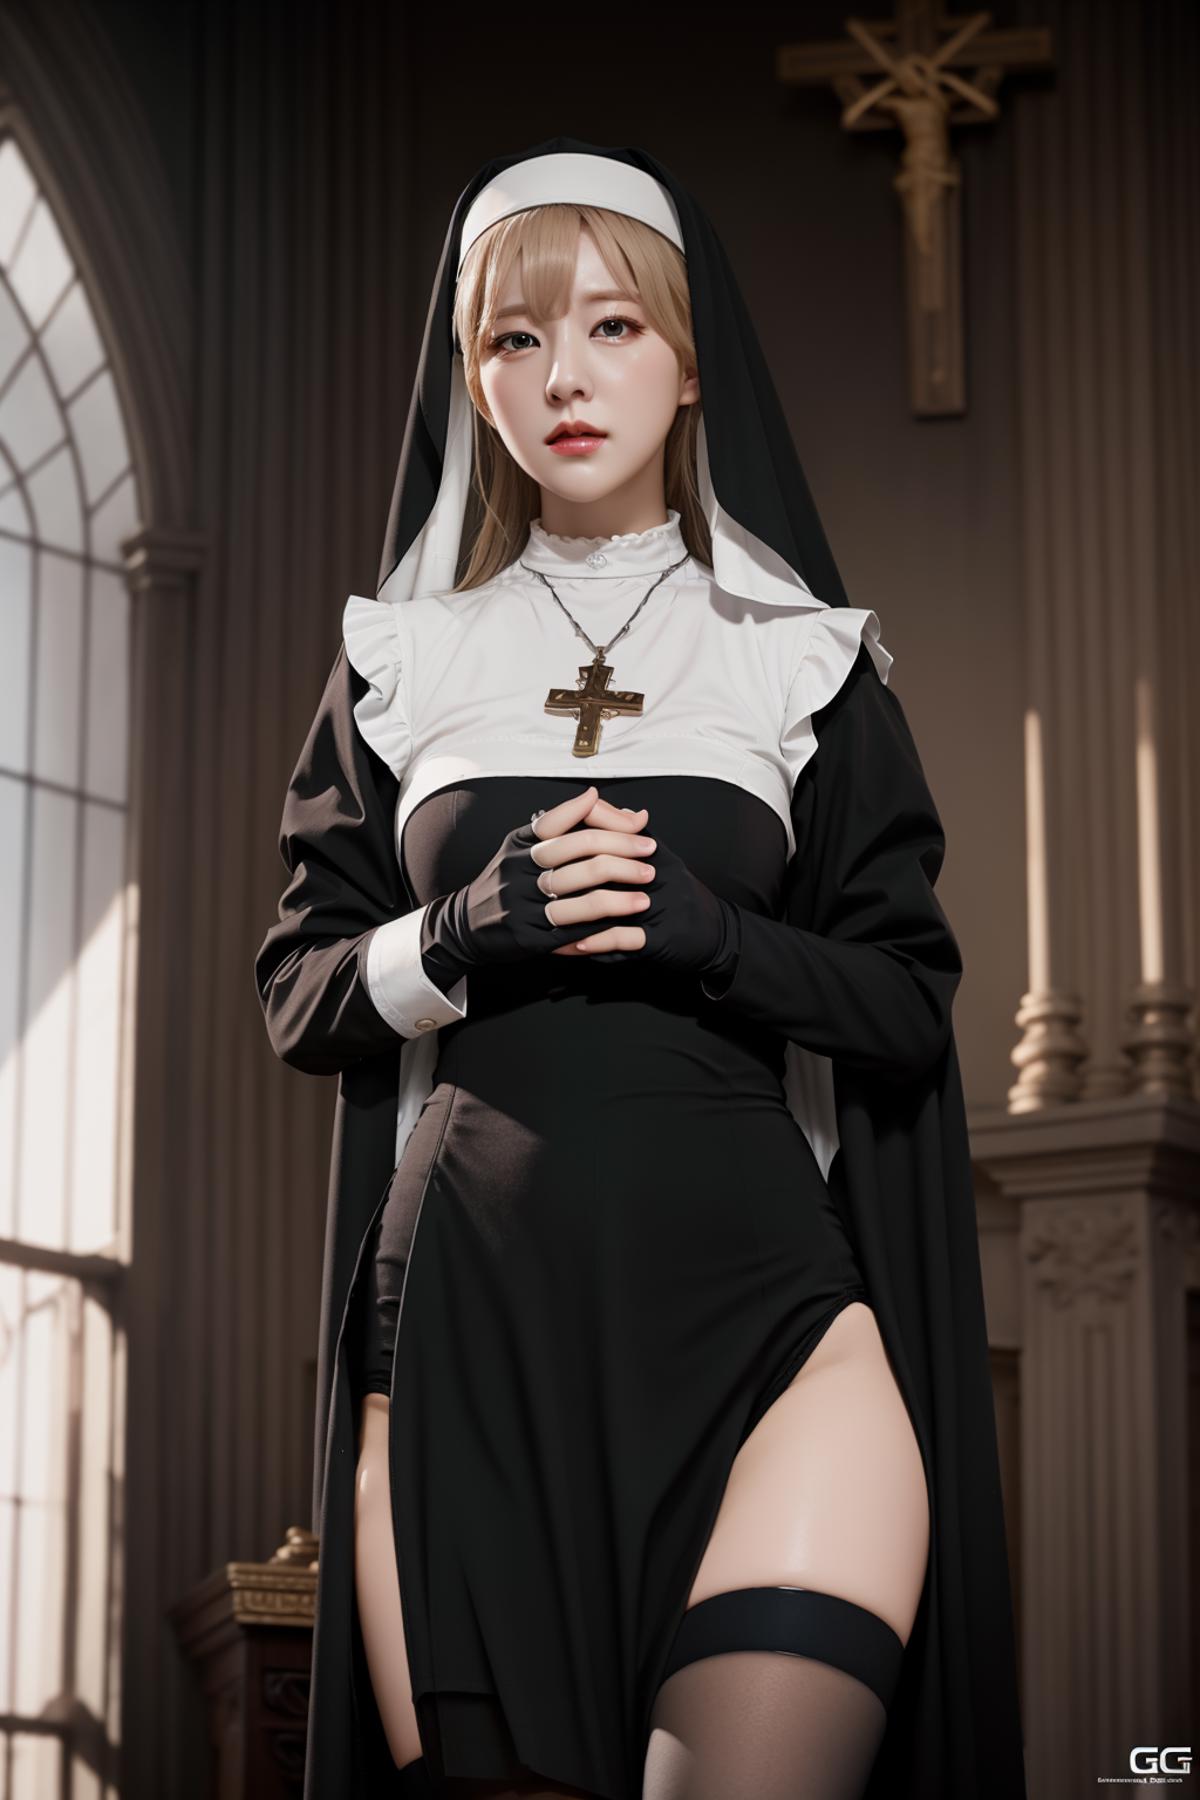 nun image by Kejolong